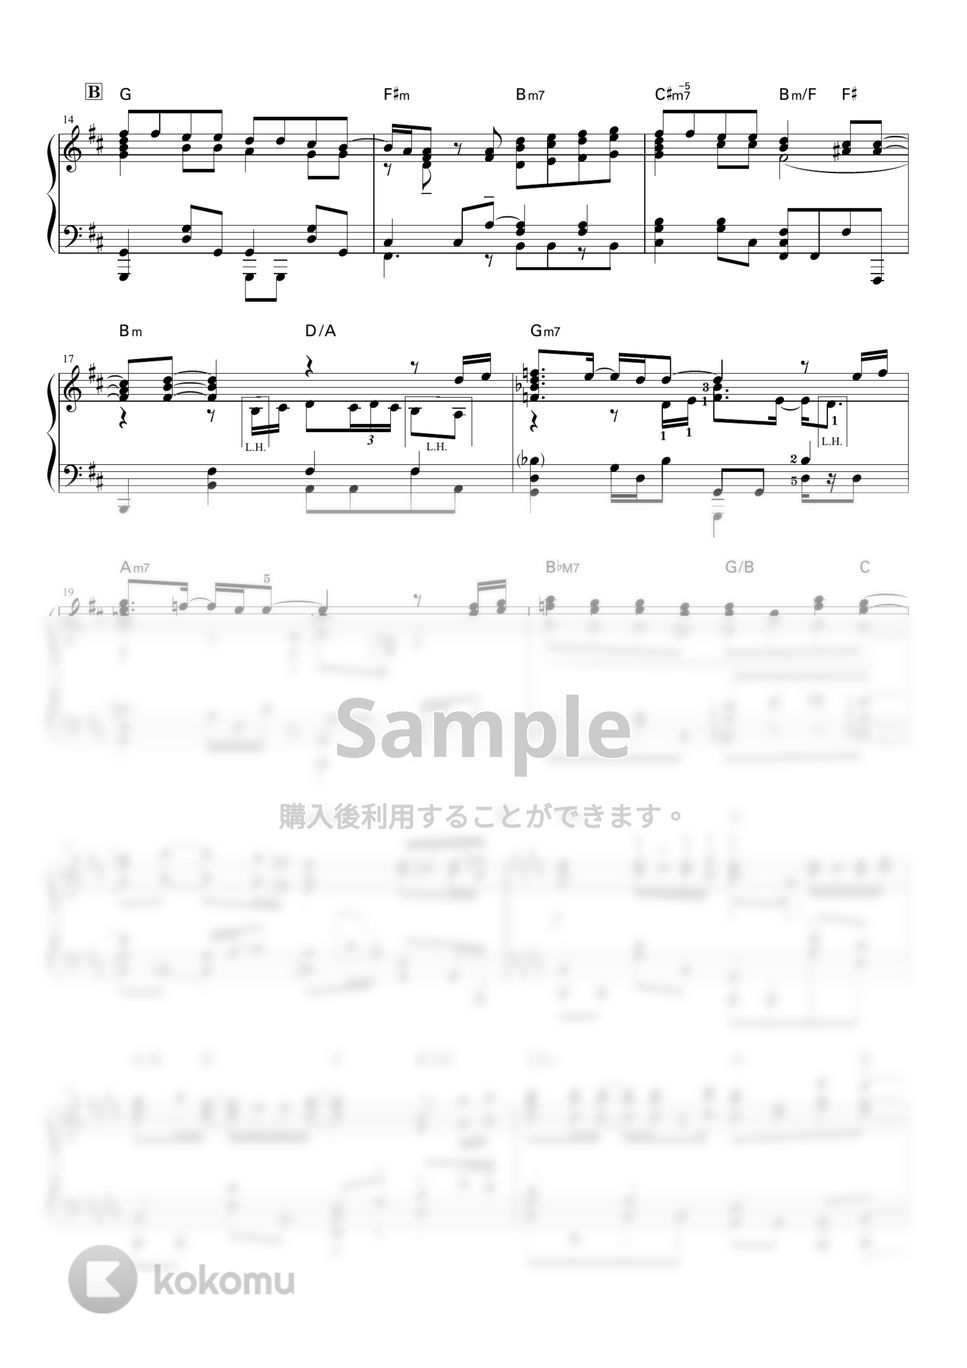 LiSA - 炎 by 阿部太一 / Pianist & Arranger